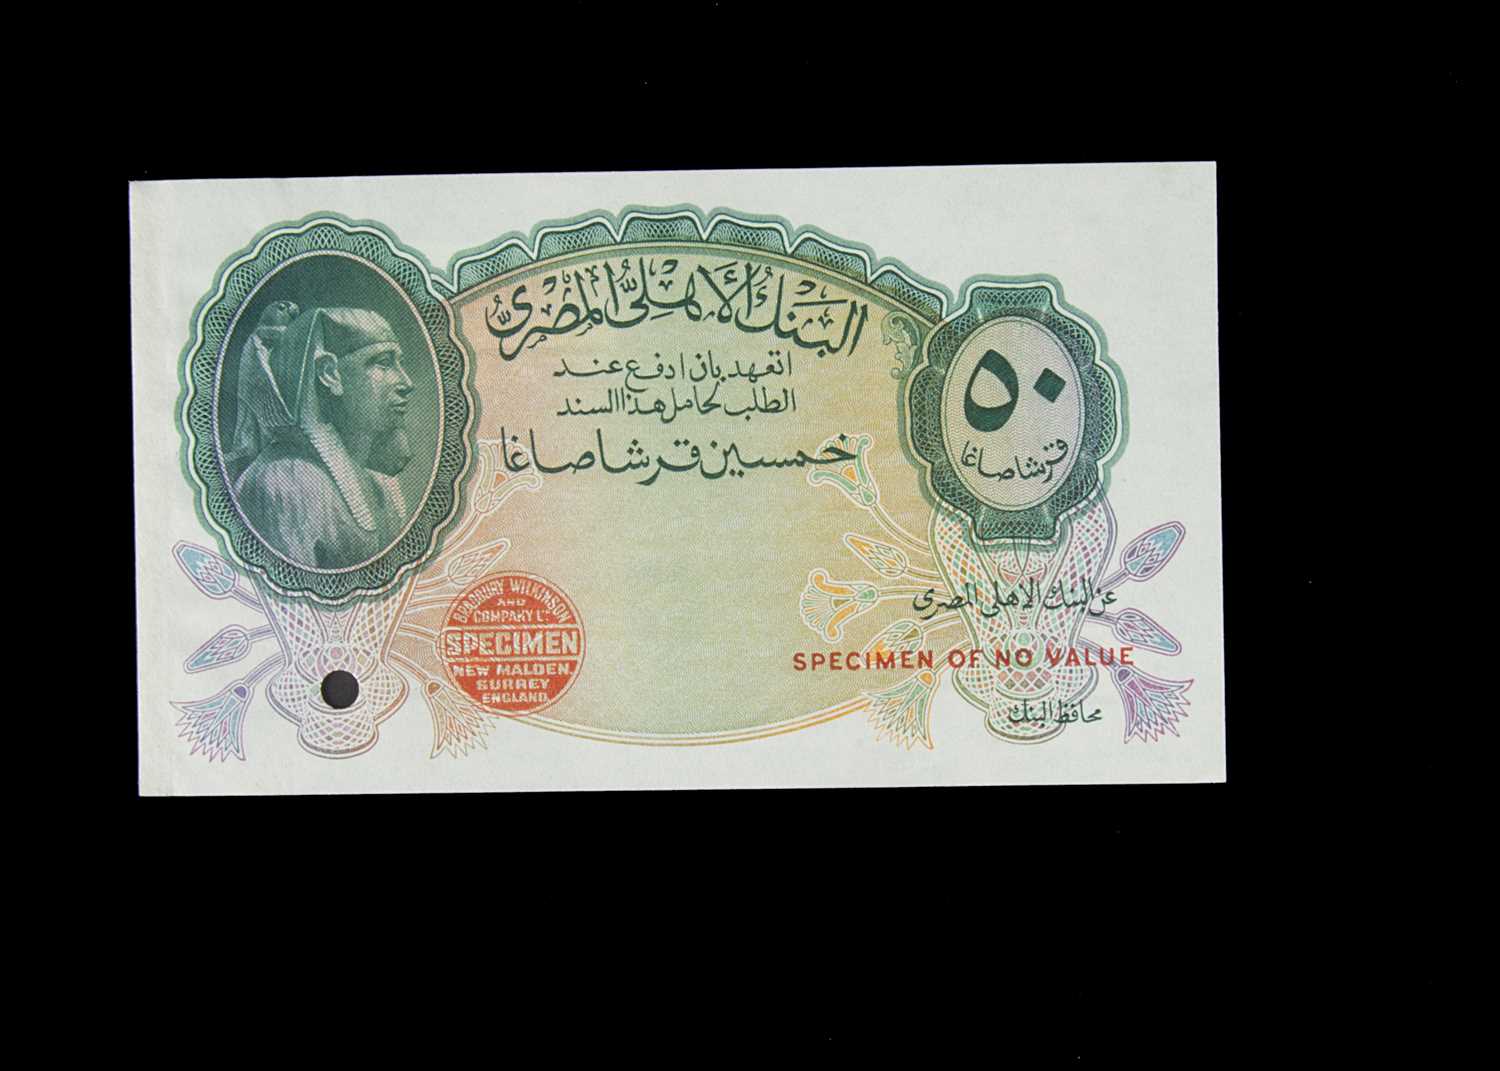 Specimen Bank Note: National Bank of Egypt specimen 50 Piastres,